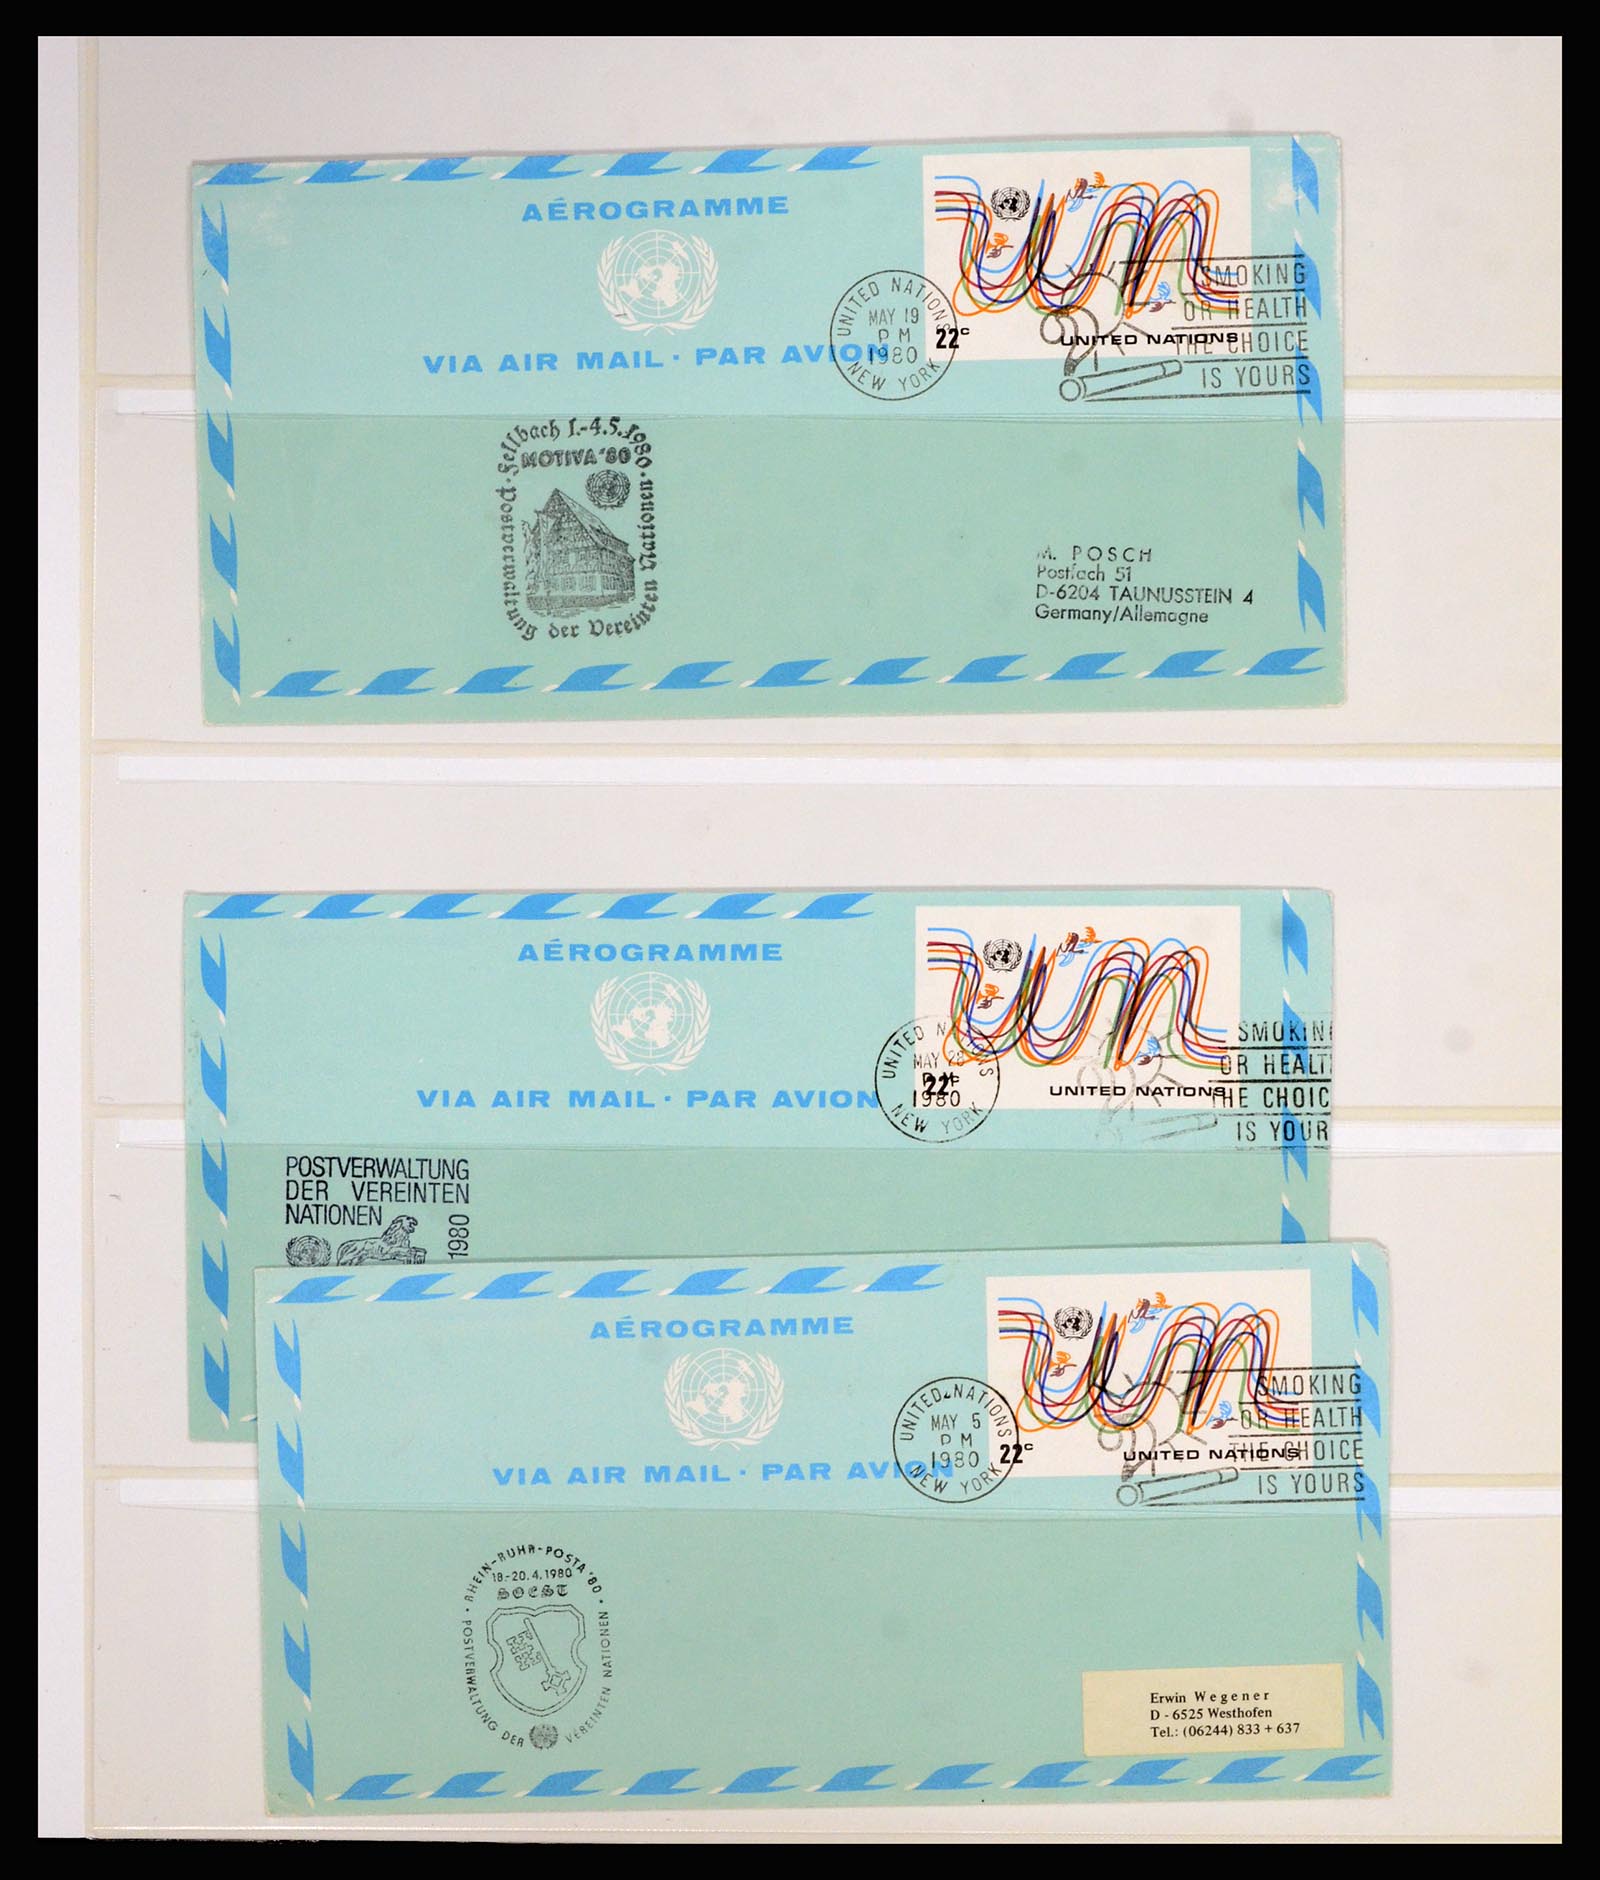 36627 071 - Stamp collection 36627 World aerograms.